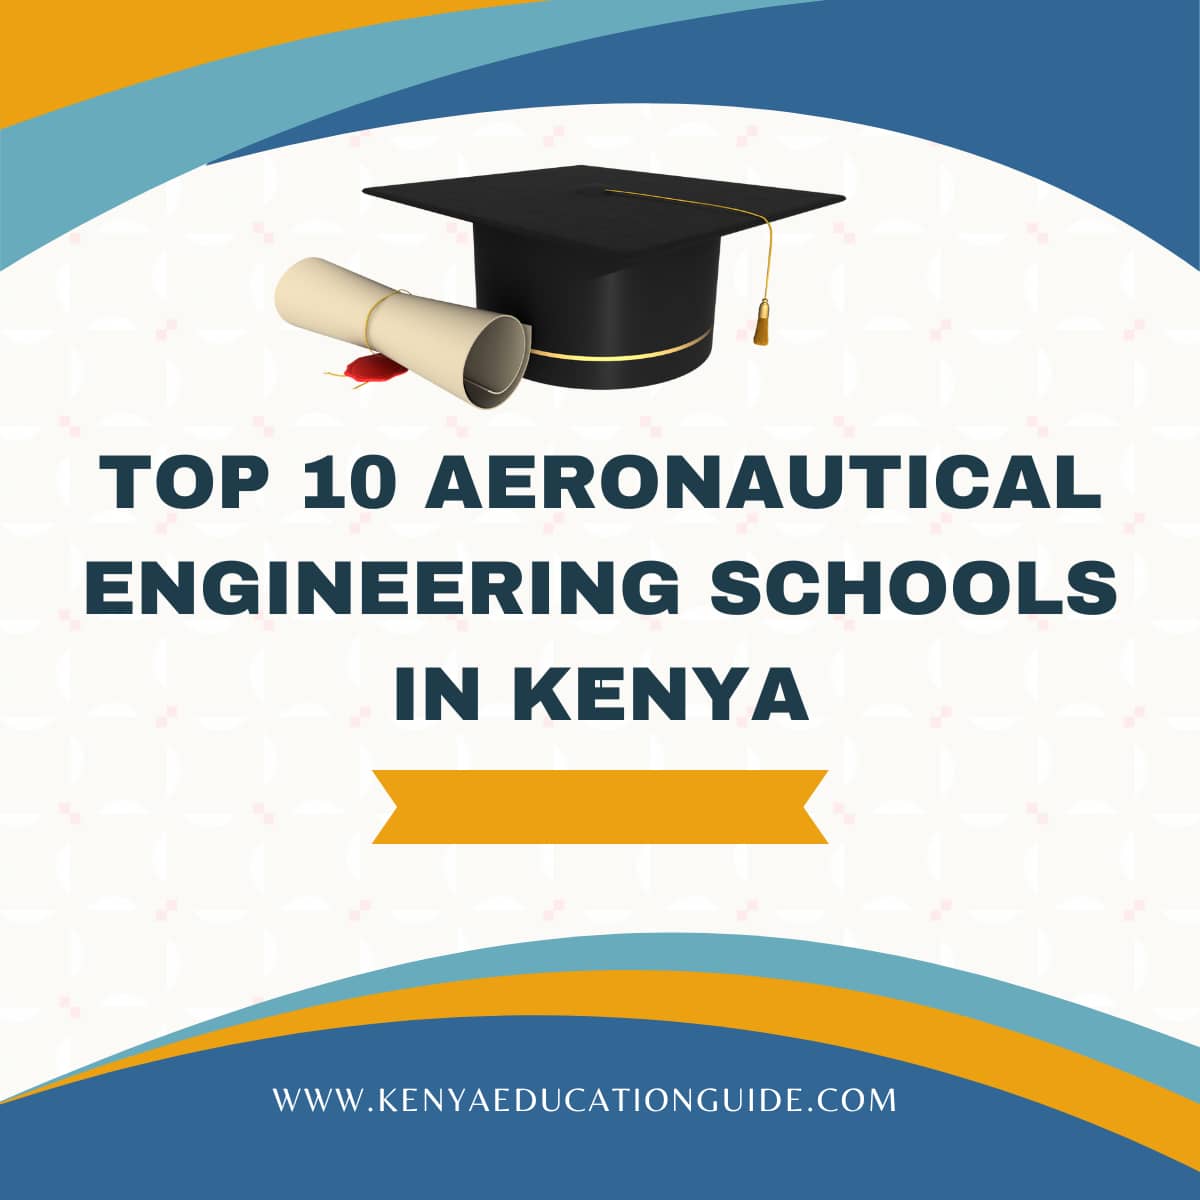 Top 10 Aeronautical Engineering Schools in Kenya